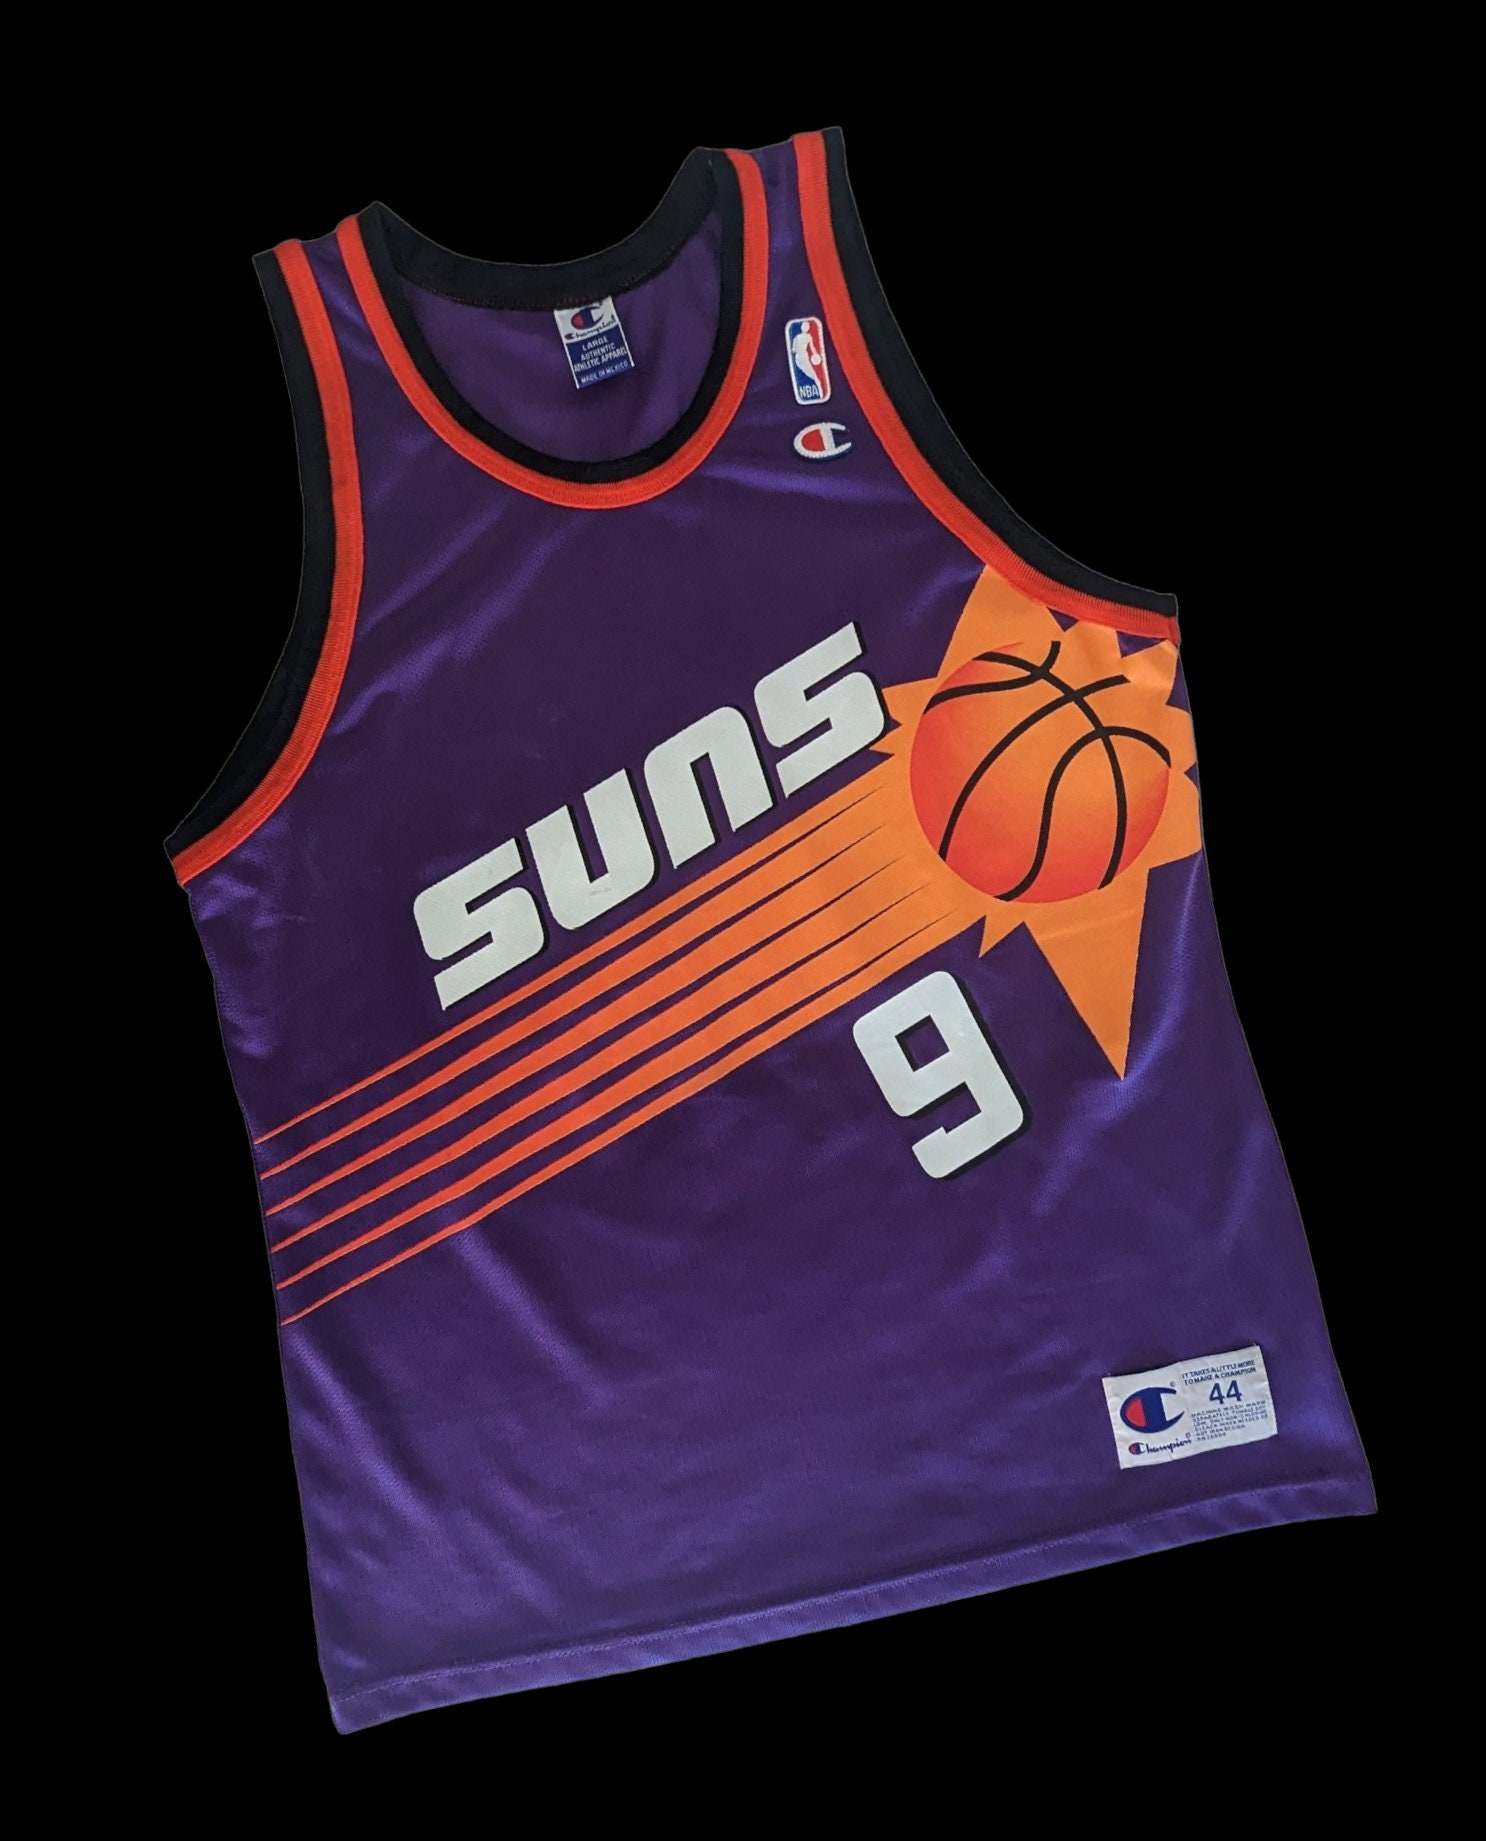 Nike Youth Phoenix Suns Devin Booker #1 Purple Cotton T-Shirt